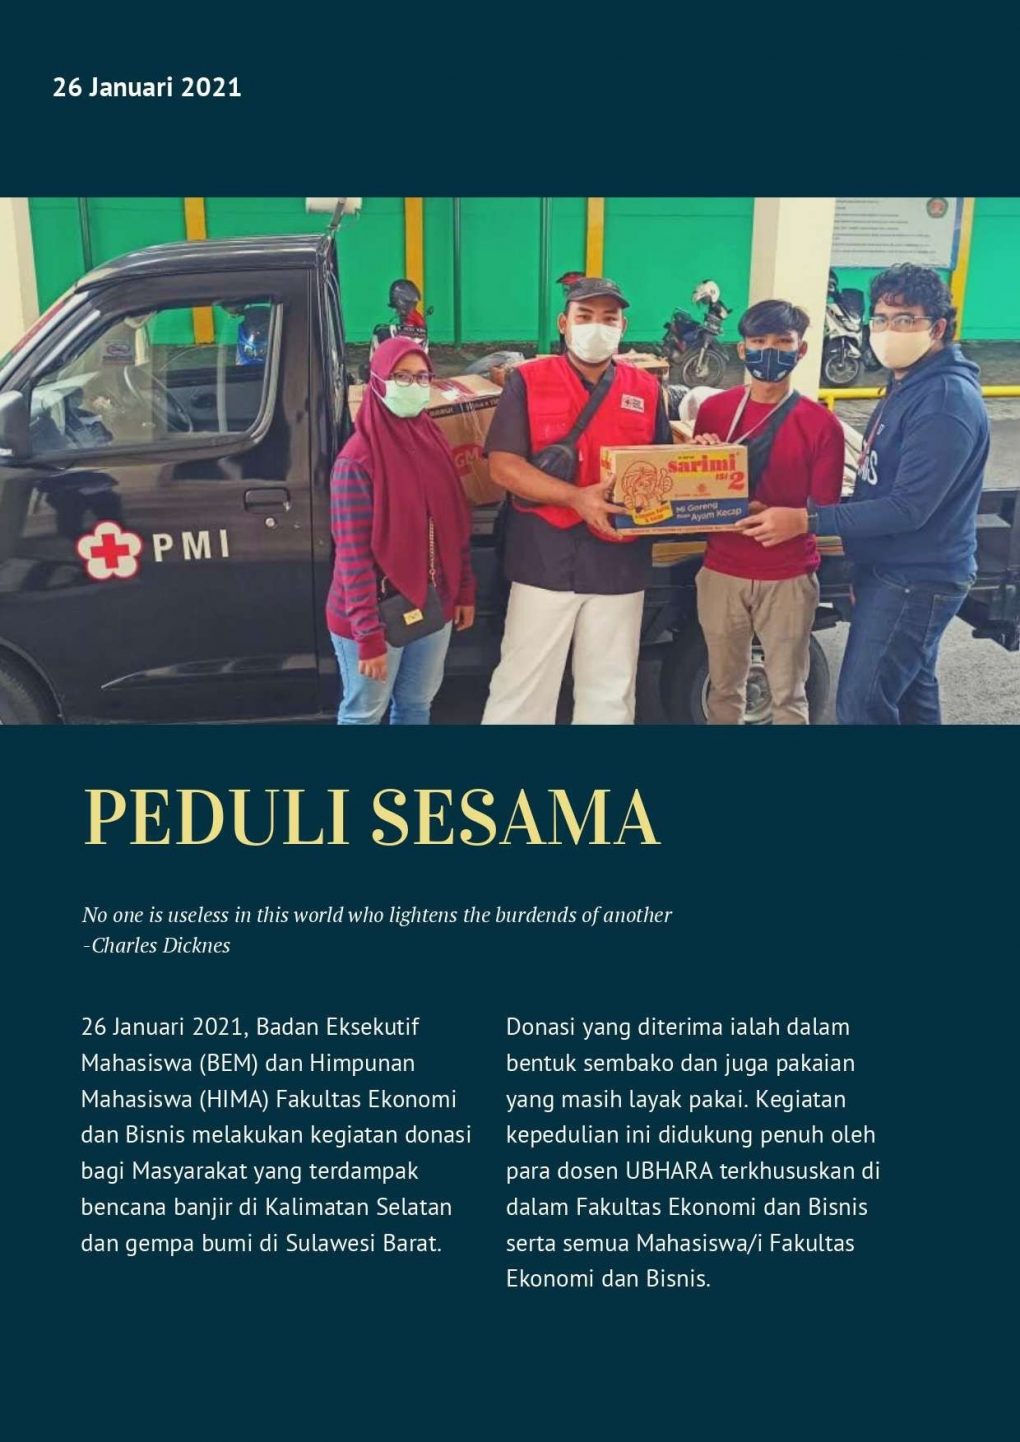 Peduli Sesama Kalimantan dan Sulawesi